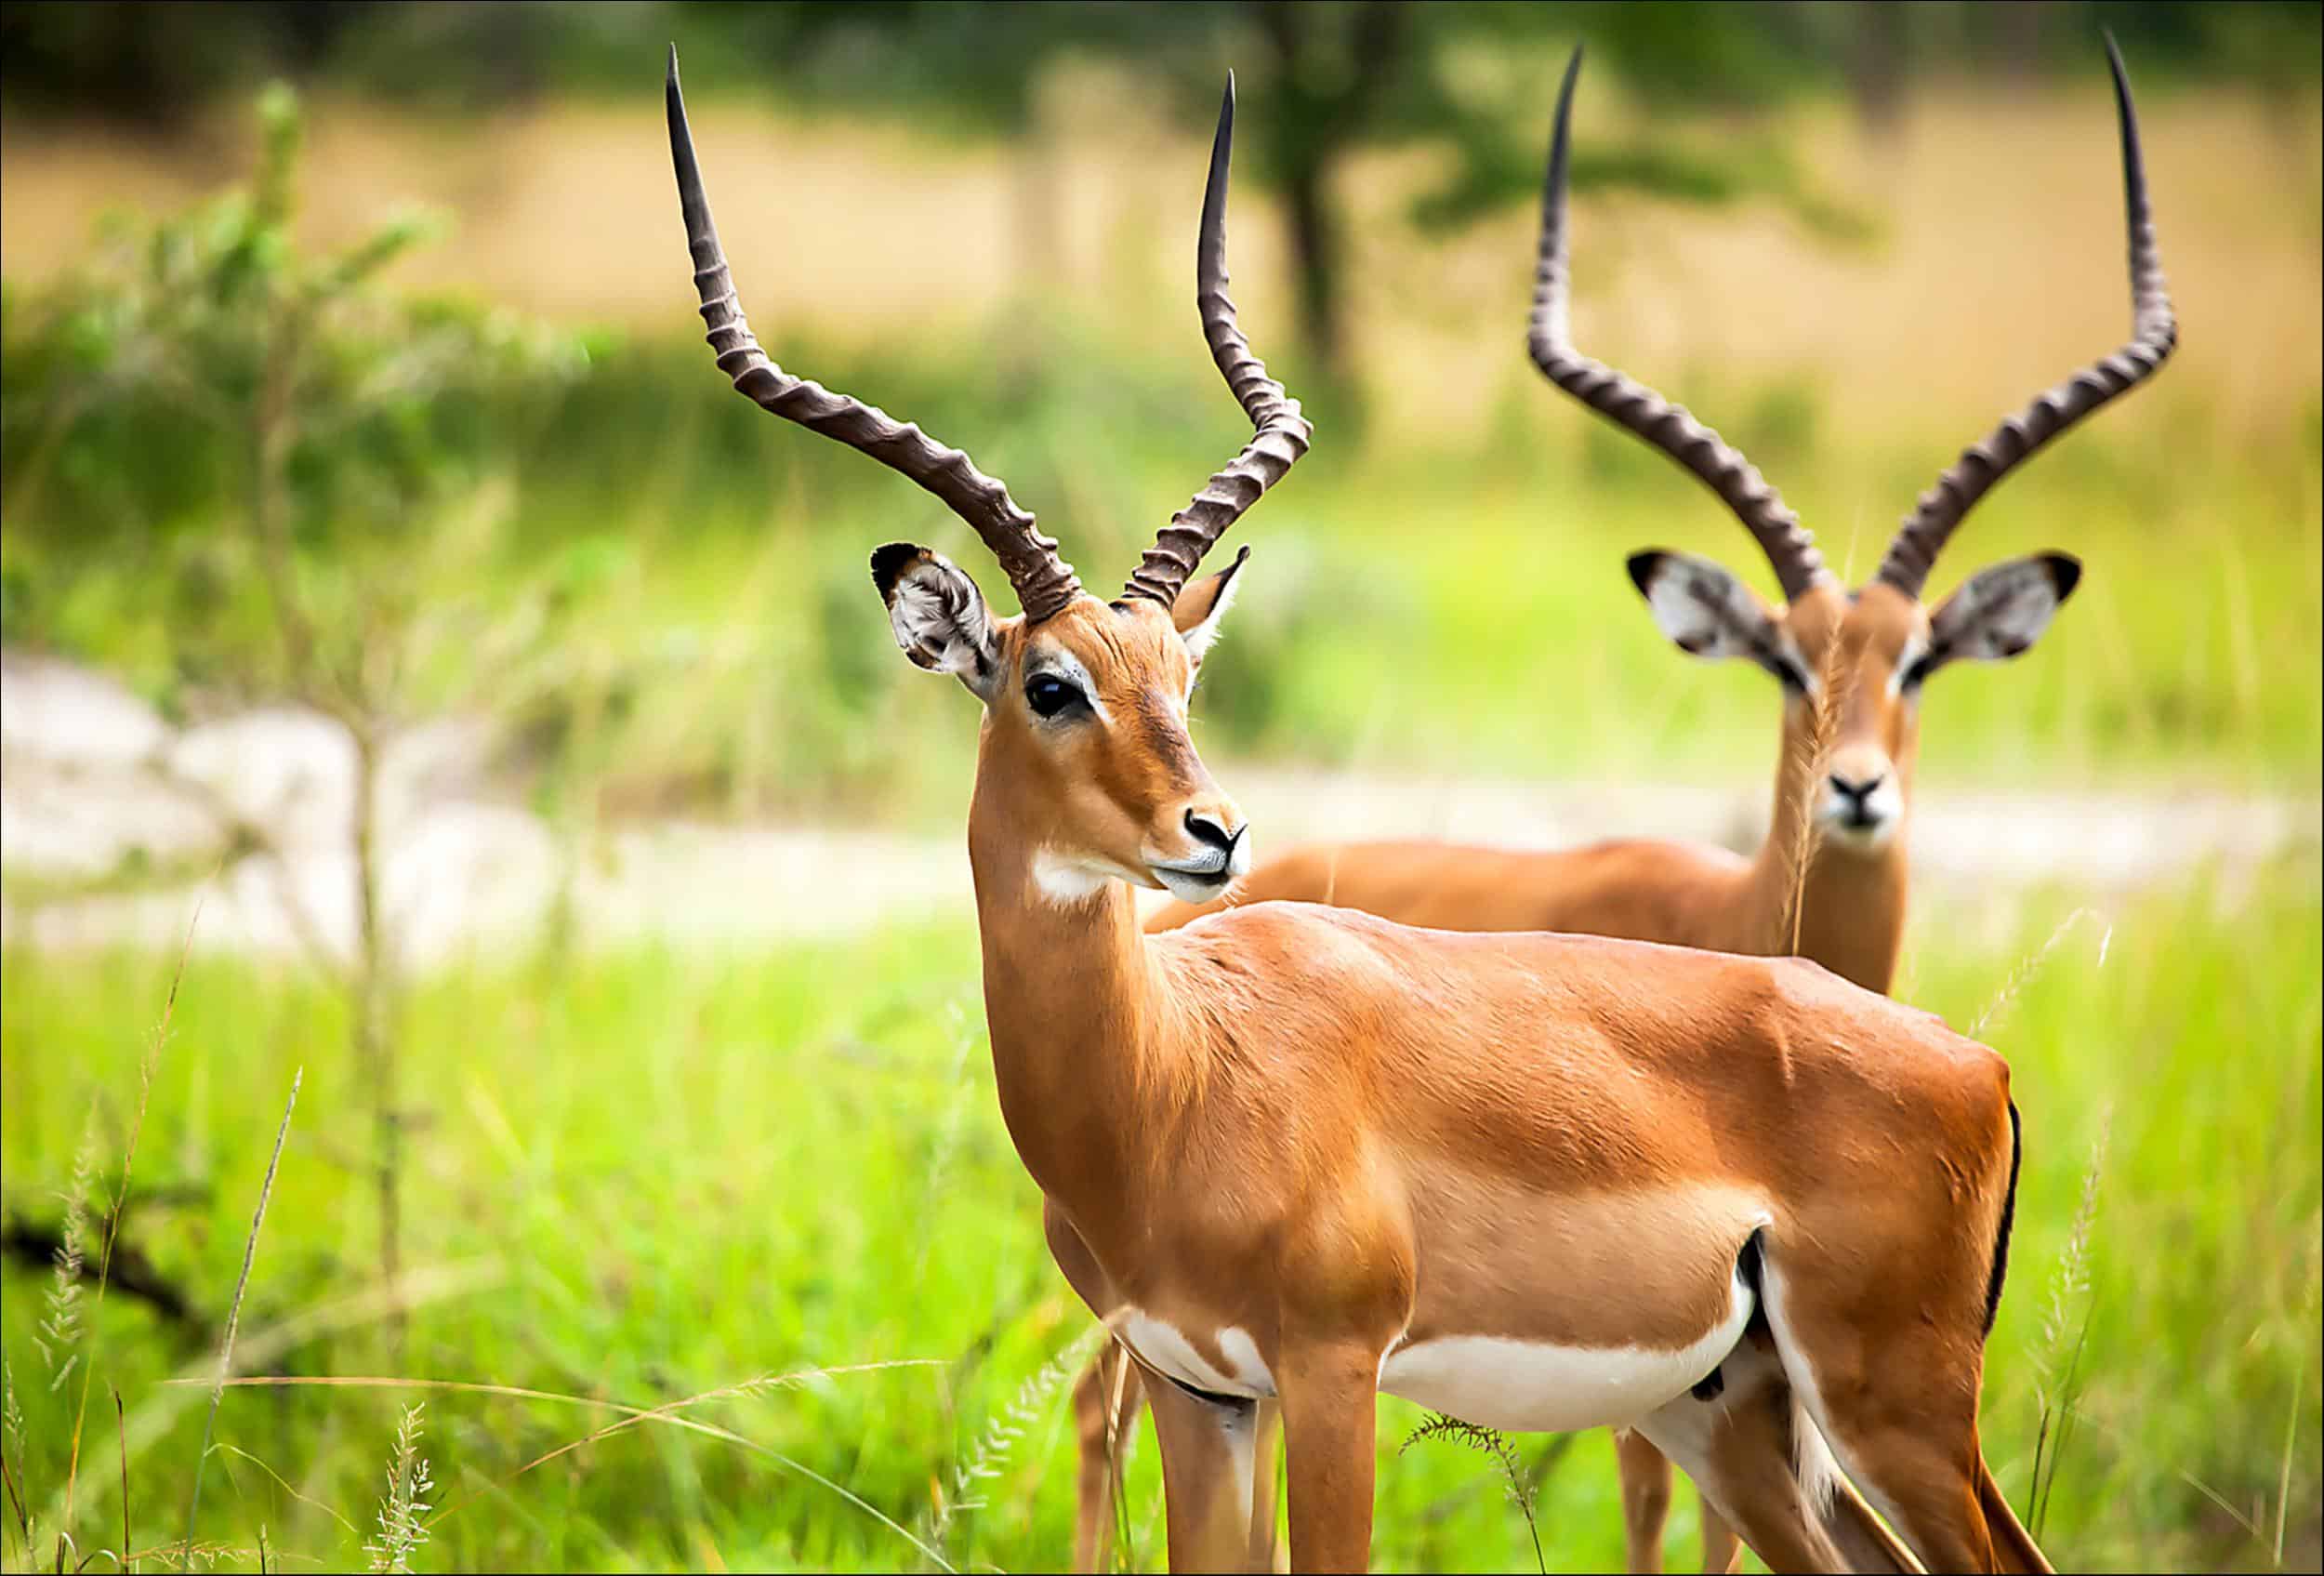 Antelope on grassland